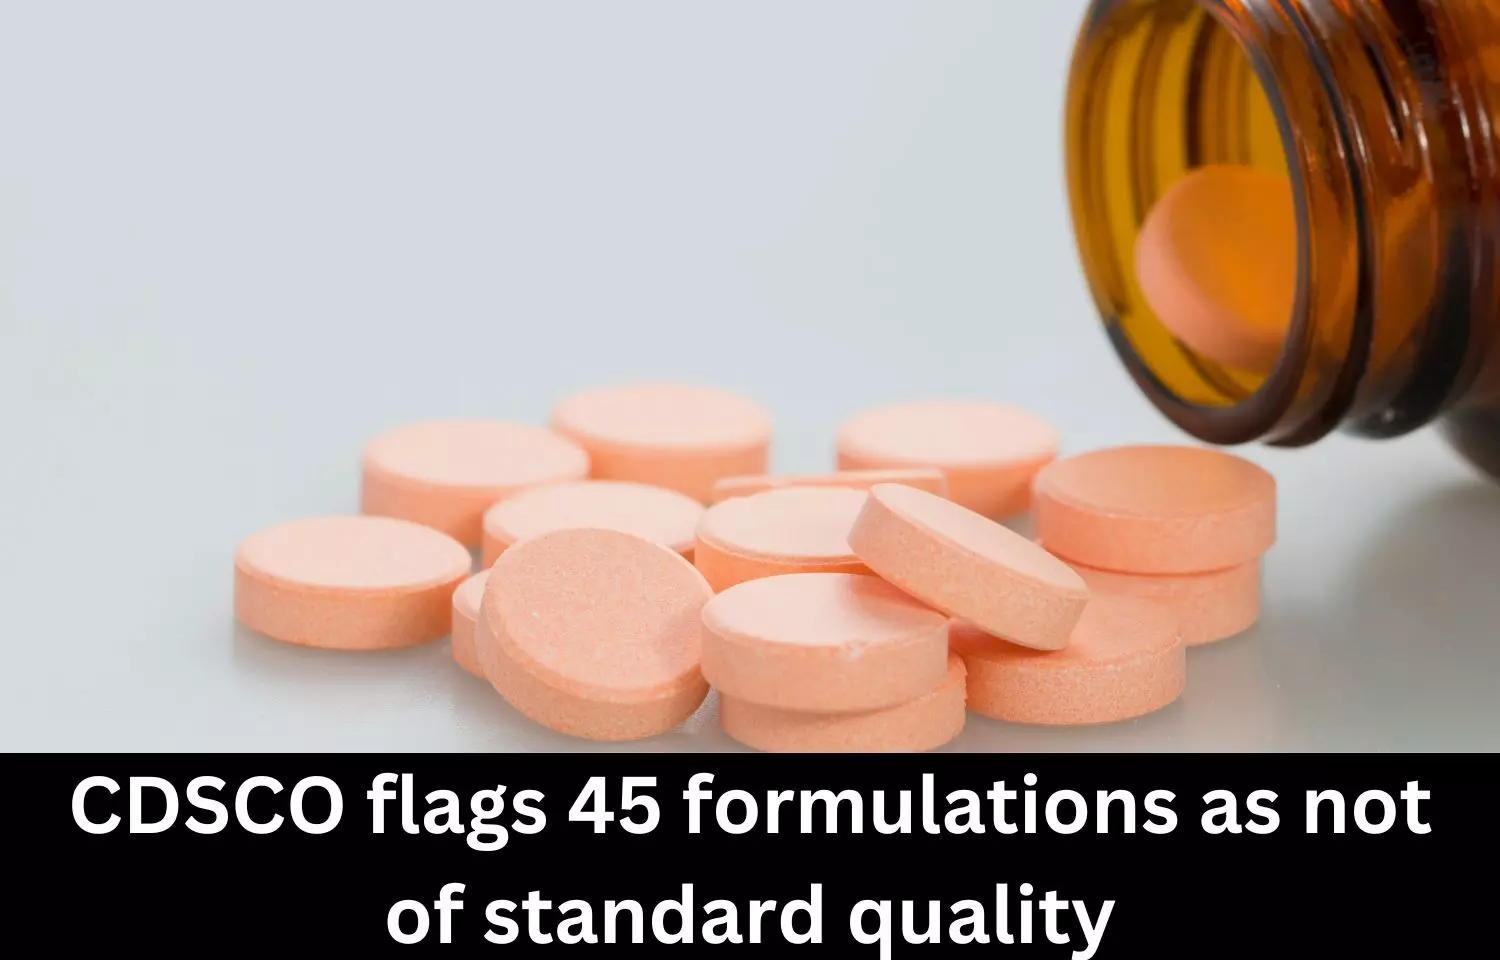 Drug Alert: CDSCO flags 45 formulations as not of standard quality